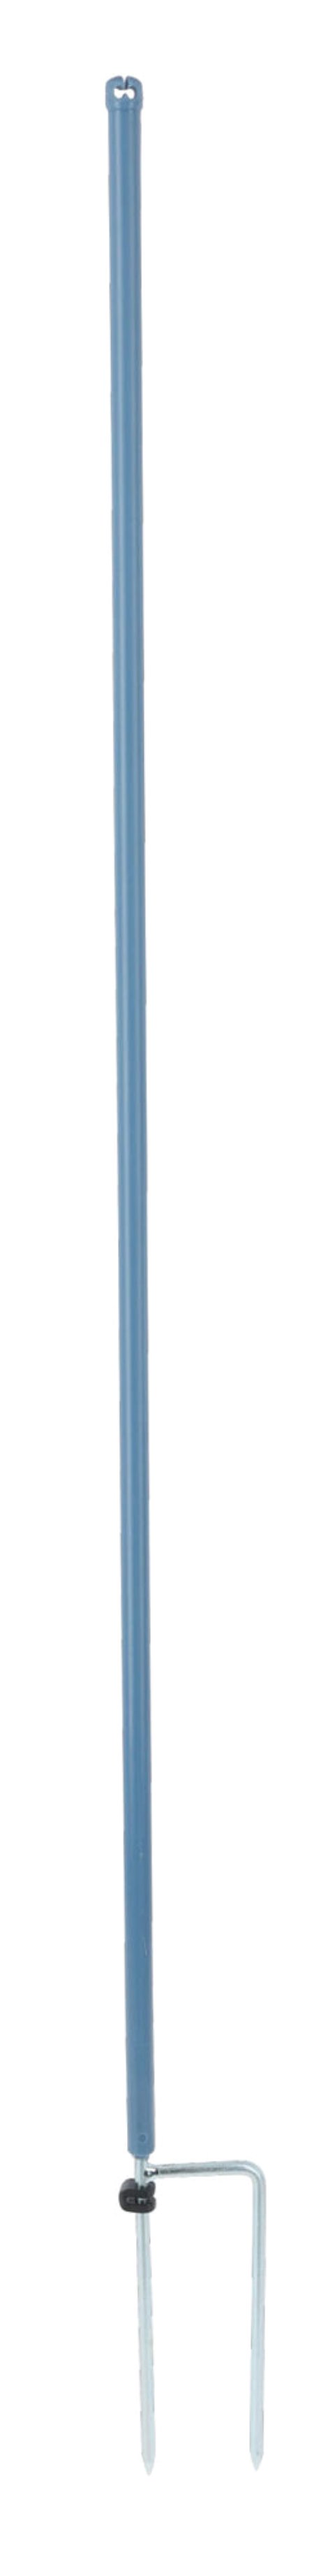 Ersatzpfahl Doppelspitze aus Thermoplast + Fiberglas 108 cm, blau